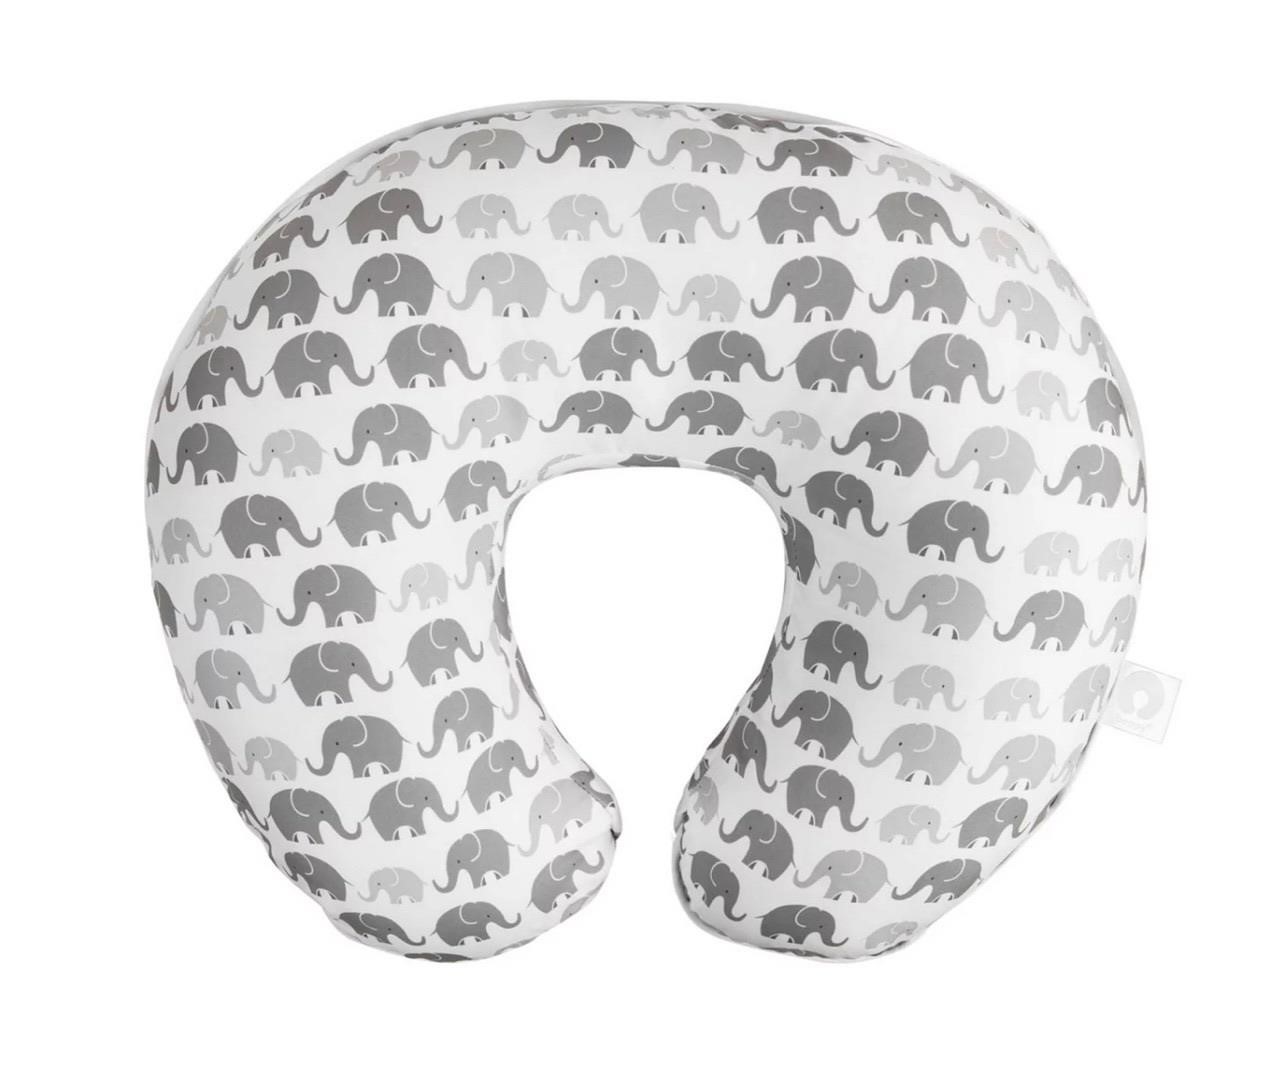 Boppy Nursing Pillow, Gray-Elephants Plaid